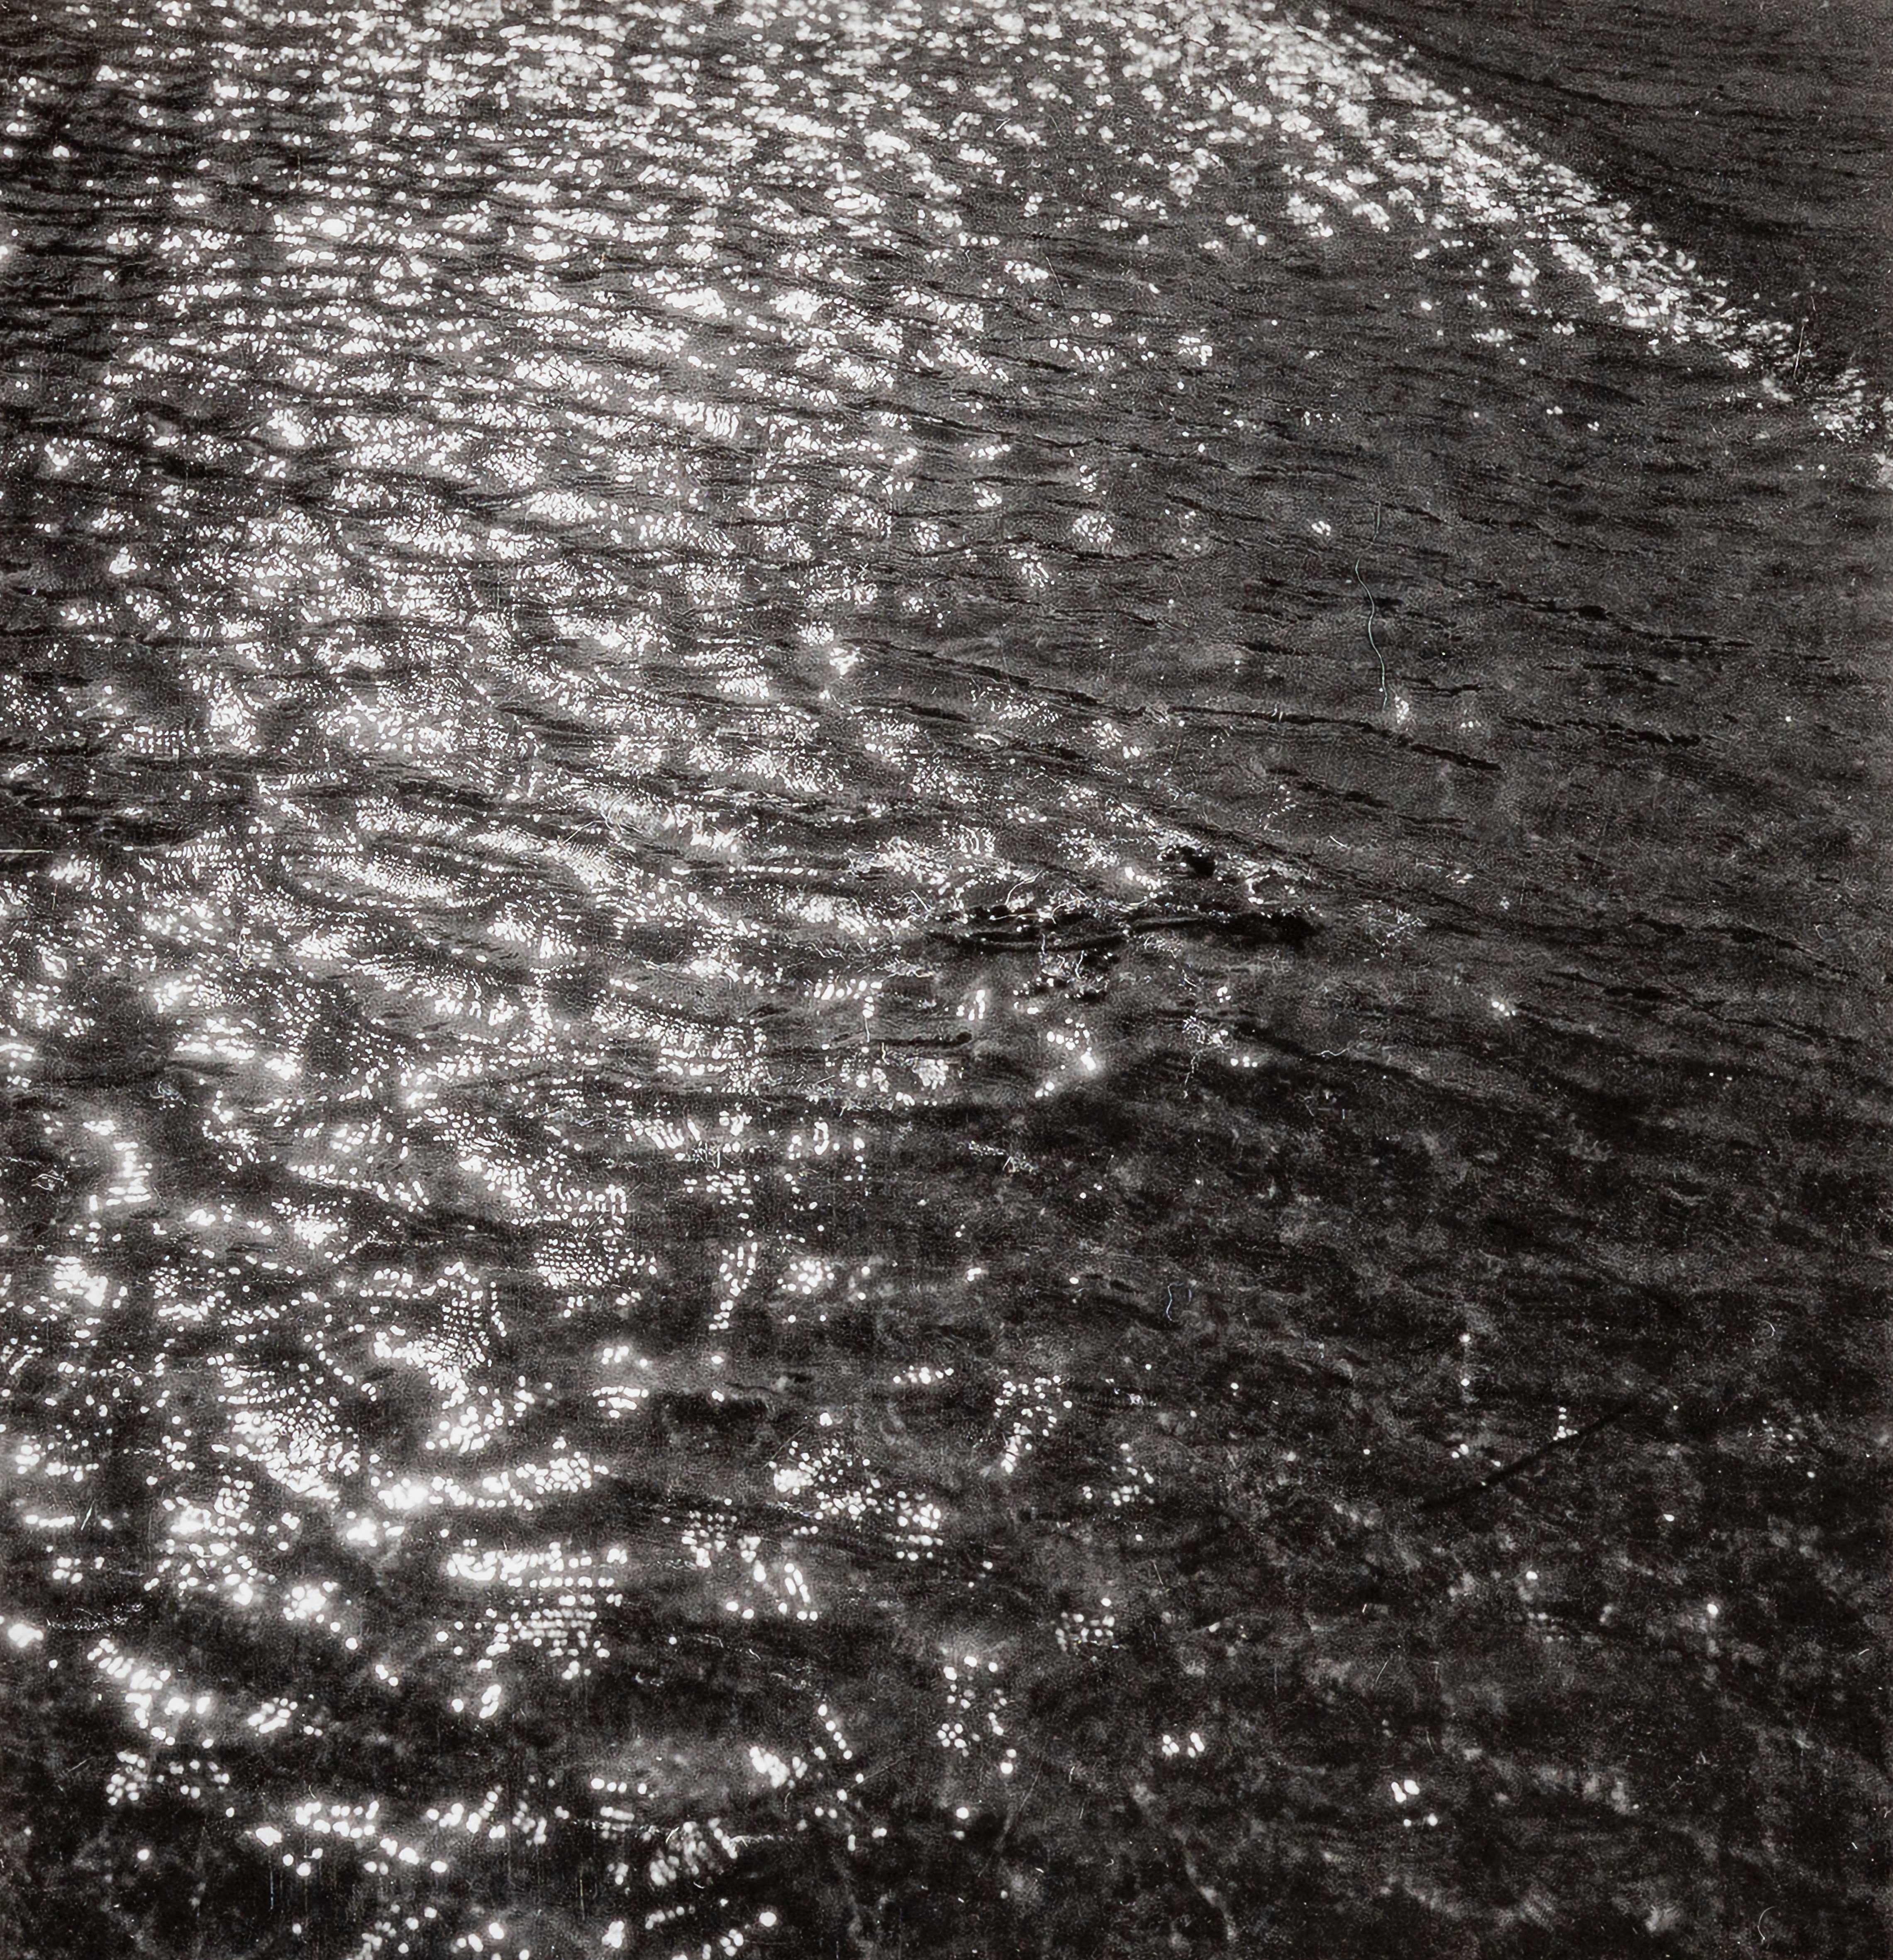 Dora Maar Black and White Photograph - Sea [Reflections], (Marines [Reflets]) II